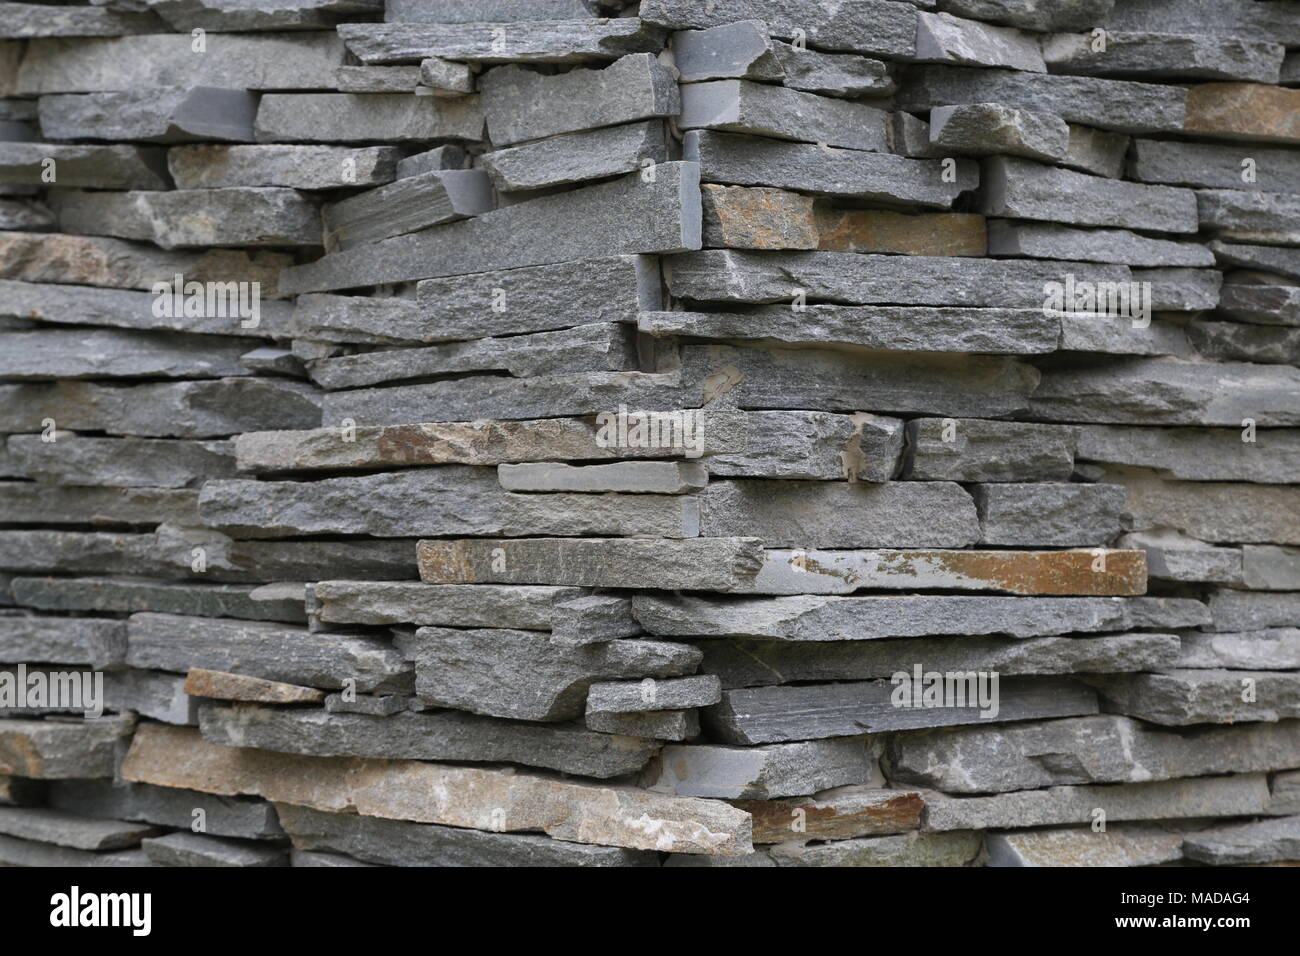 Lógicamente jazz idioma Placas de piedra gris horizontales apilados Fotografía de stock - Alamy